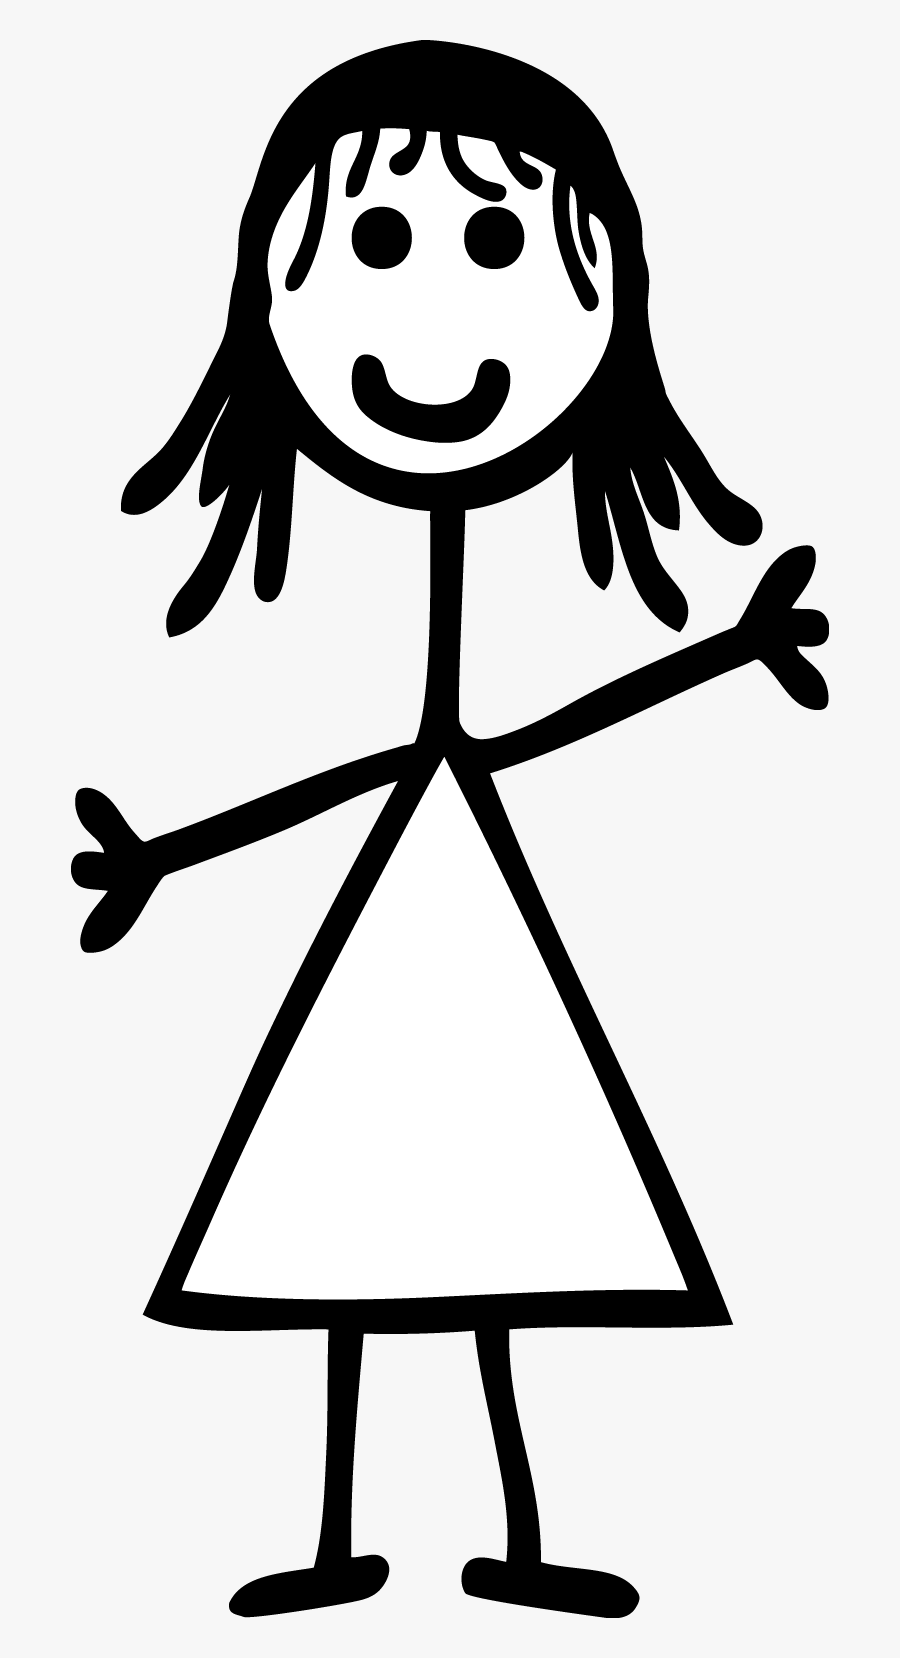 Mom Clipart Stick Figure - Stick Figure Girl Png, Transparent Clipart